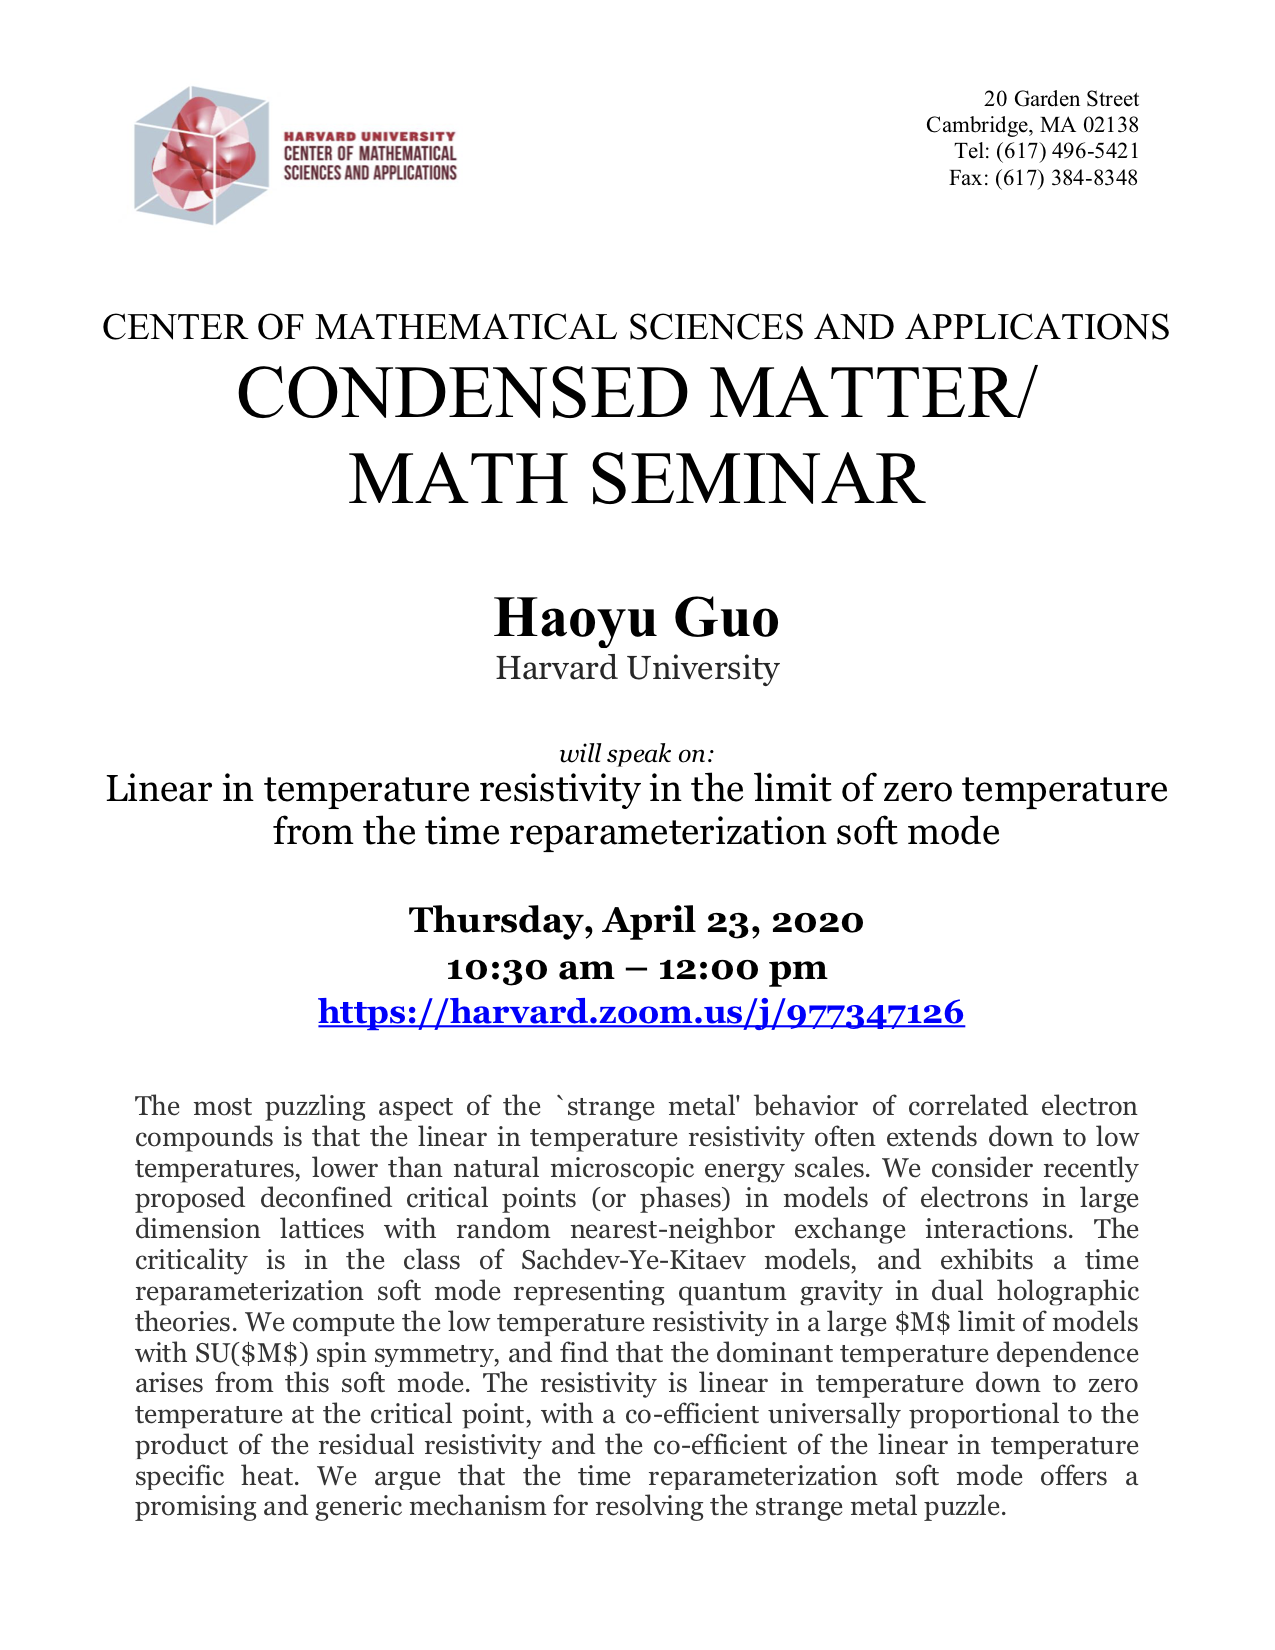 CMSA-Condensed-Matter_Math-Seminar-04.23.30